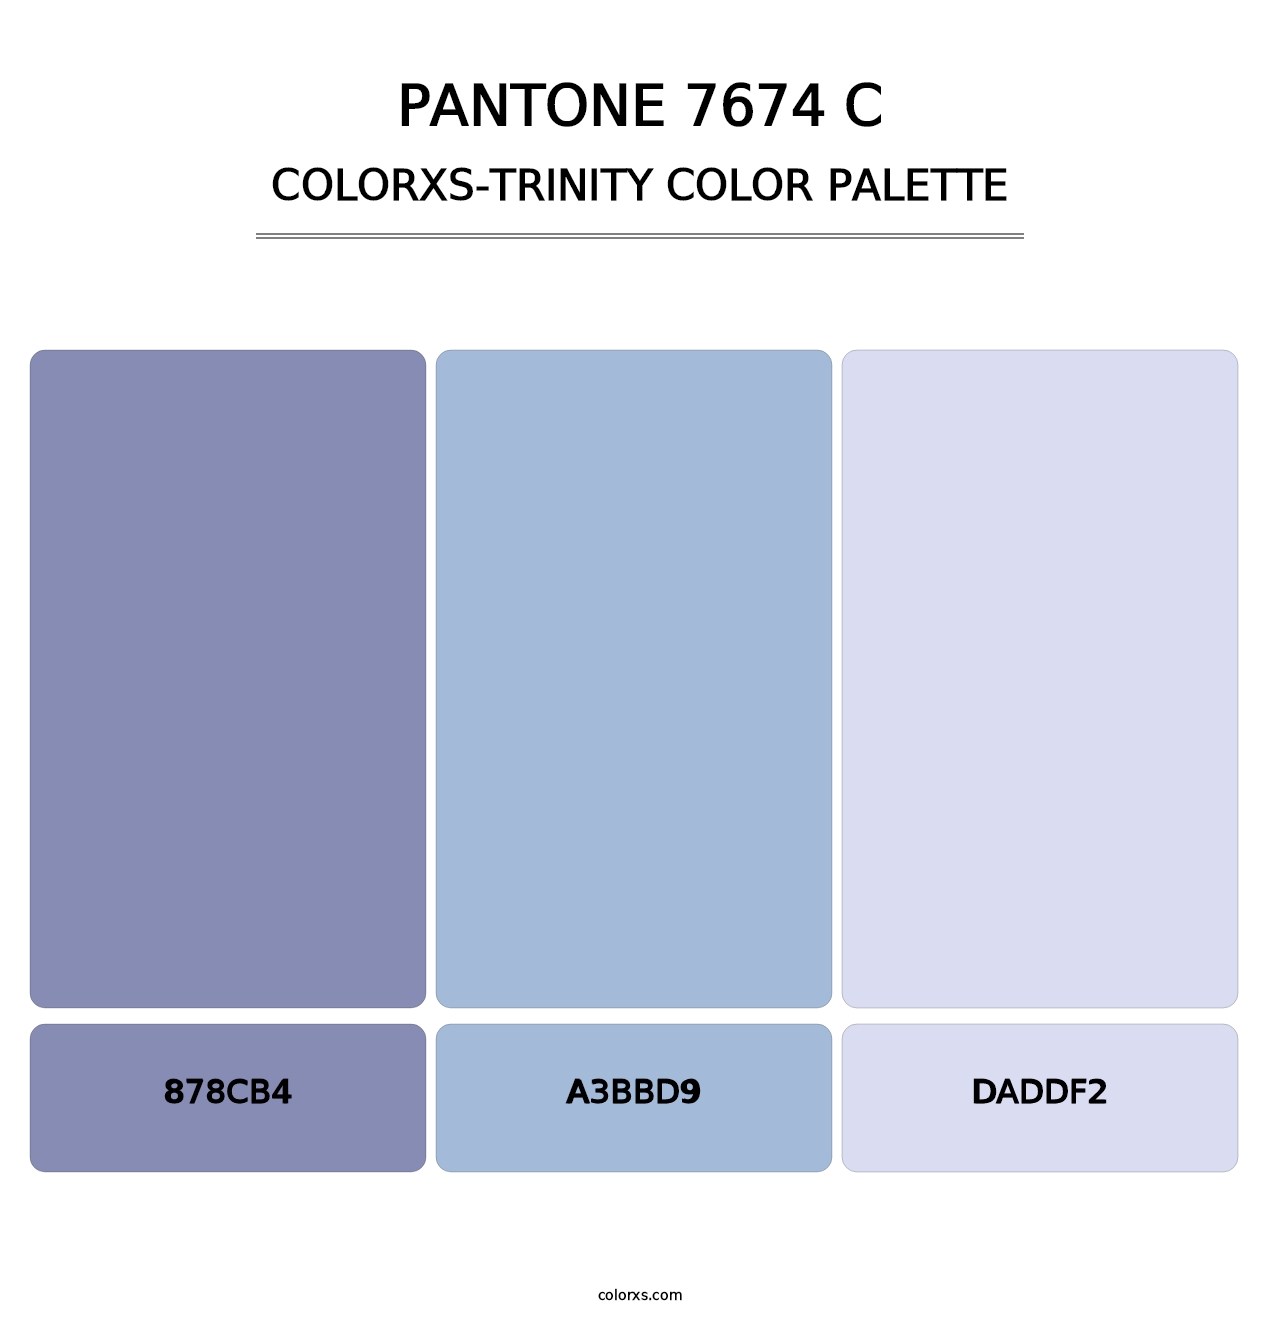 PANTONE 7674 C - Colorxs Trinity Palette